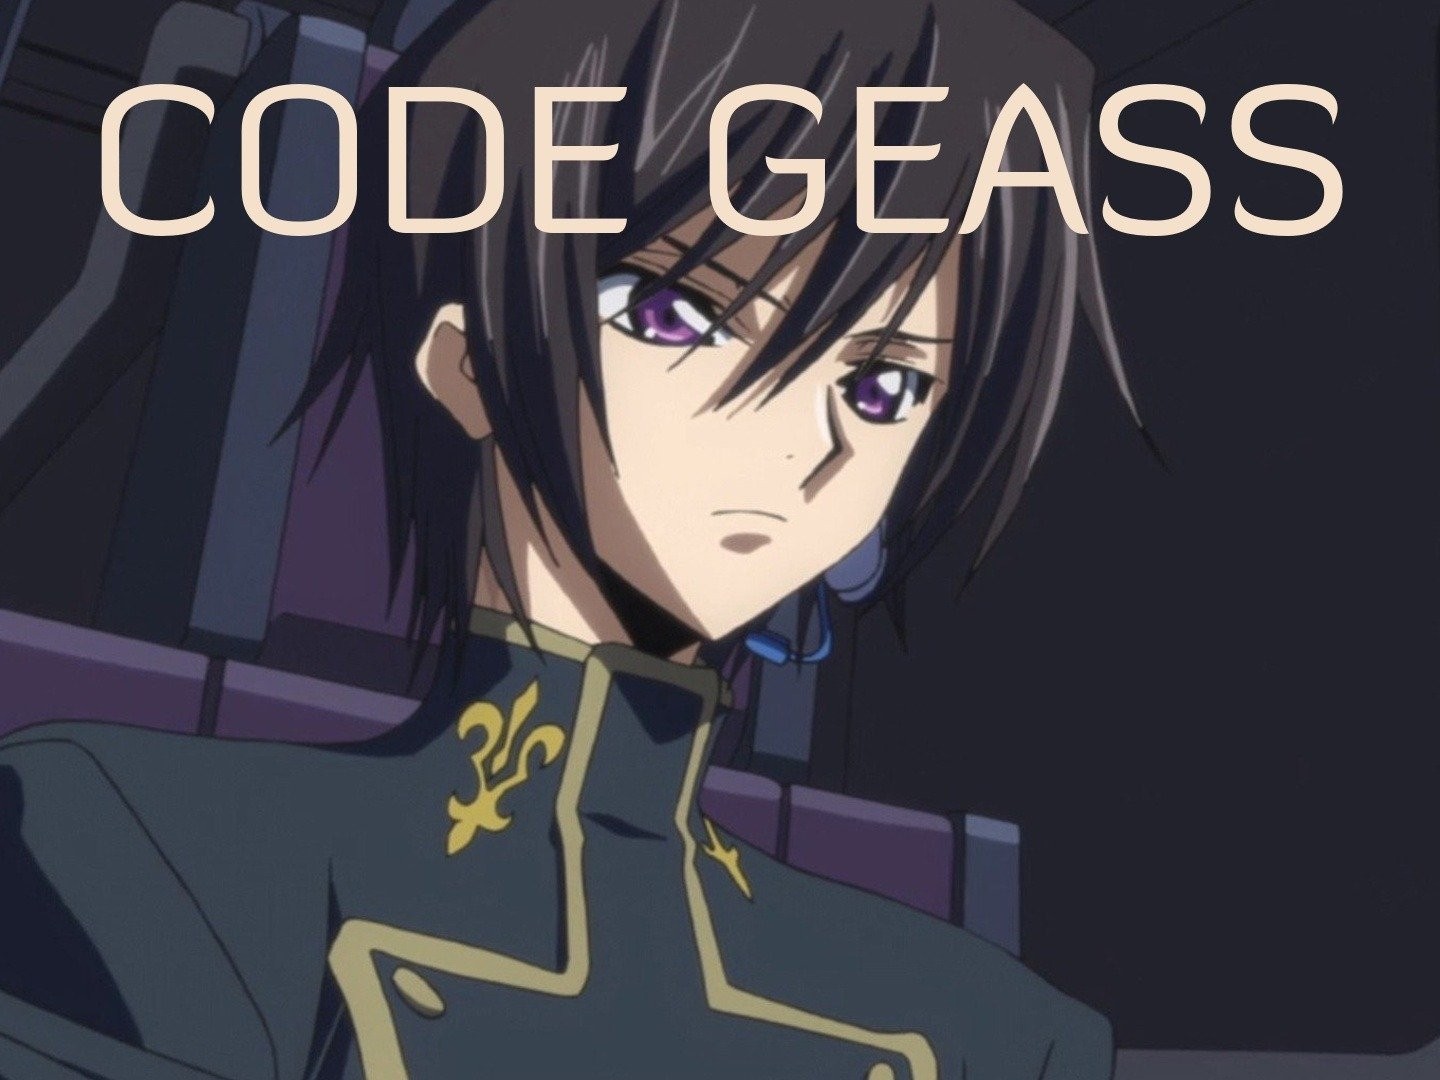 Code Geass – Lelouch Rebellion